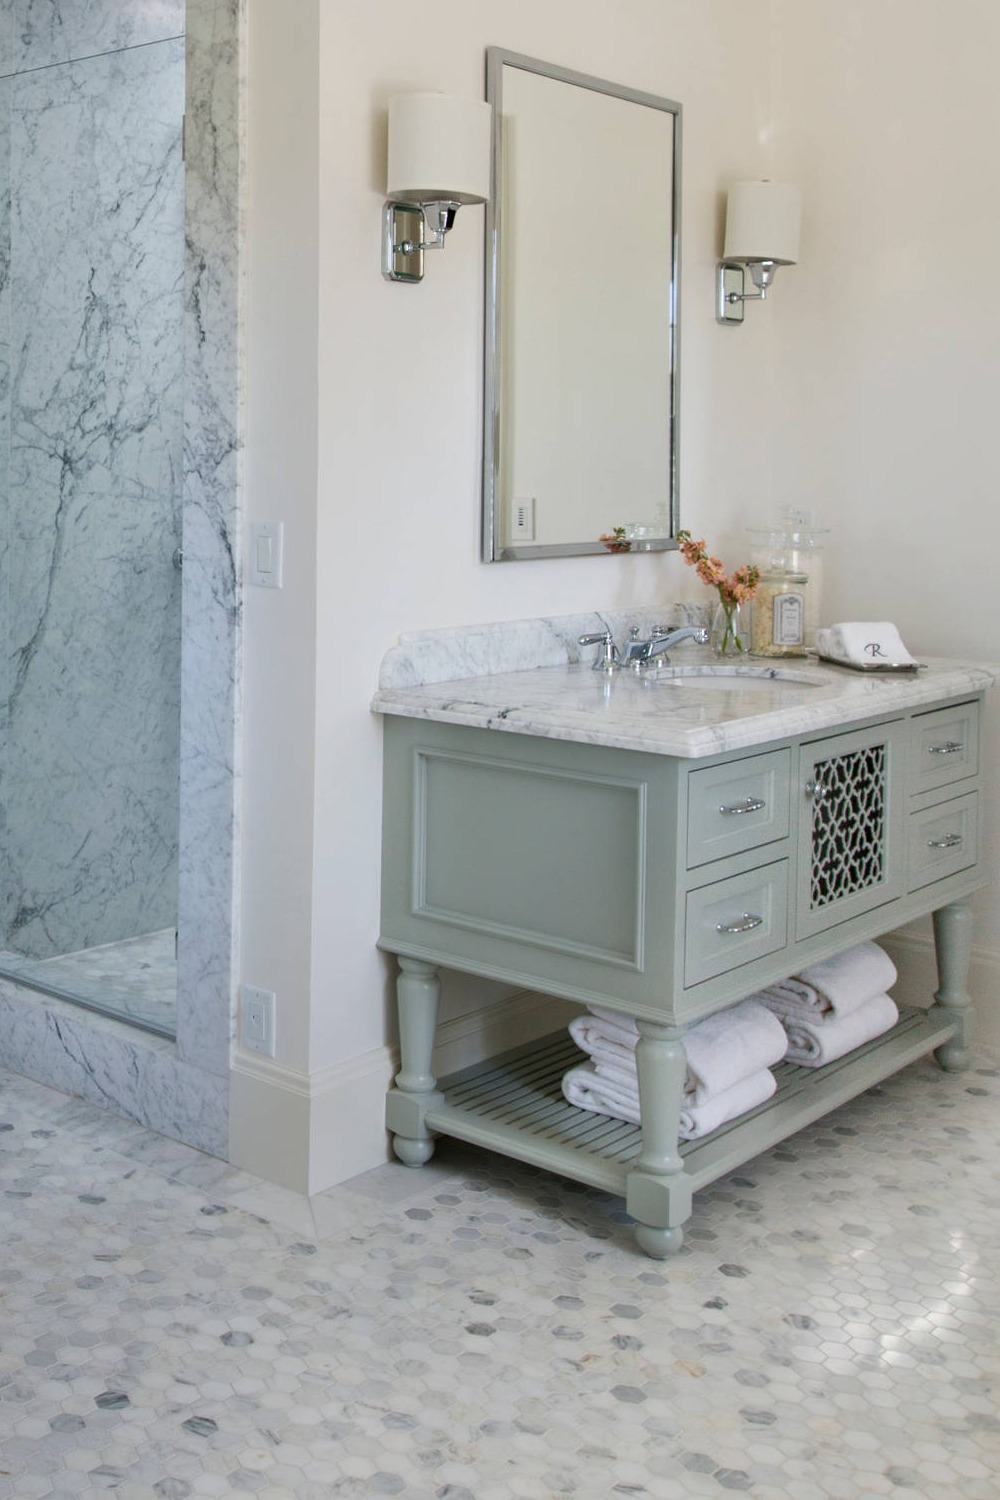 White Marble Countertops Backsplash Gray Cabinets Mosaic Tile Floor